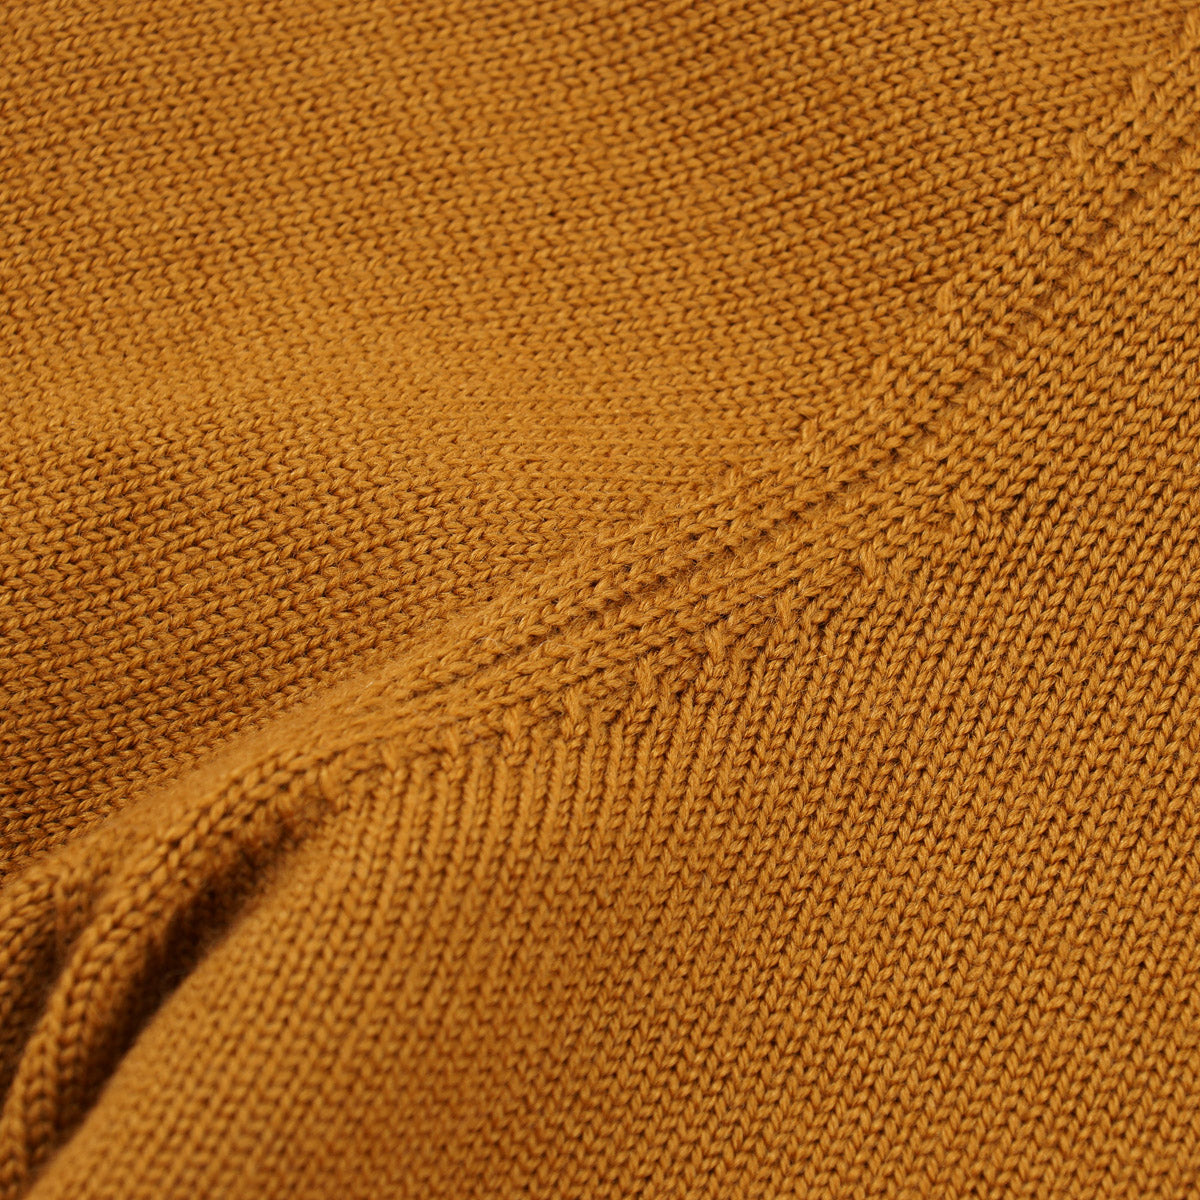 Drumohr Plush Knit Merino Wool Sweater - Top Shelf Apparel